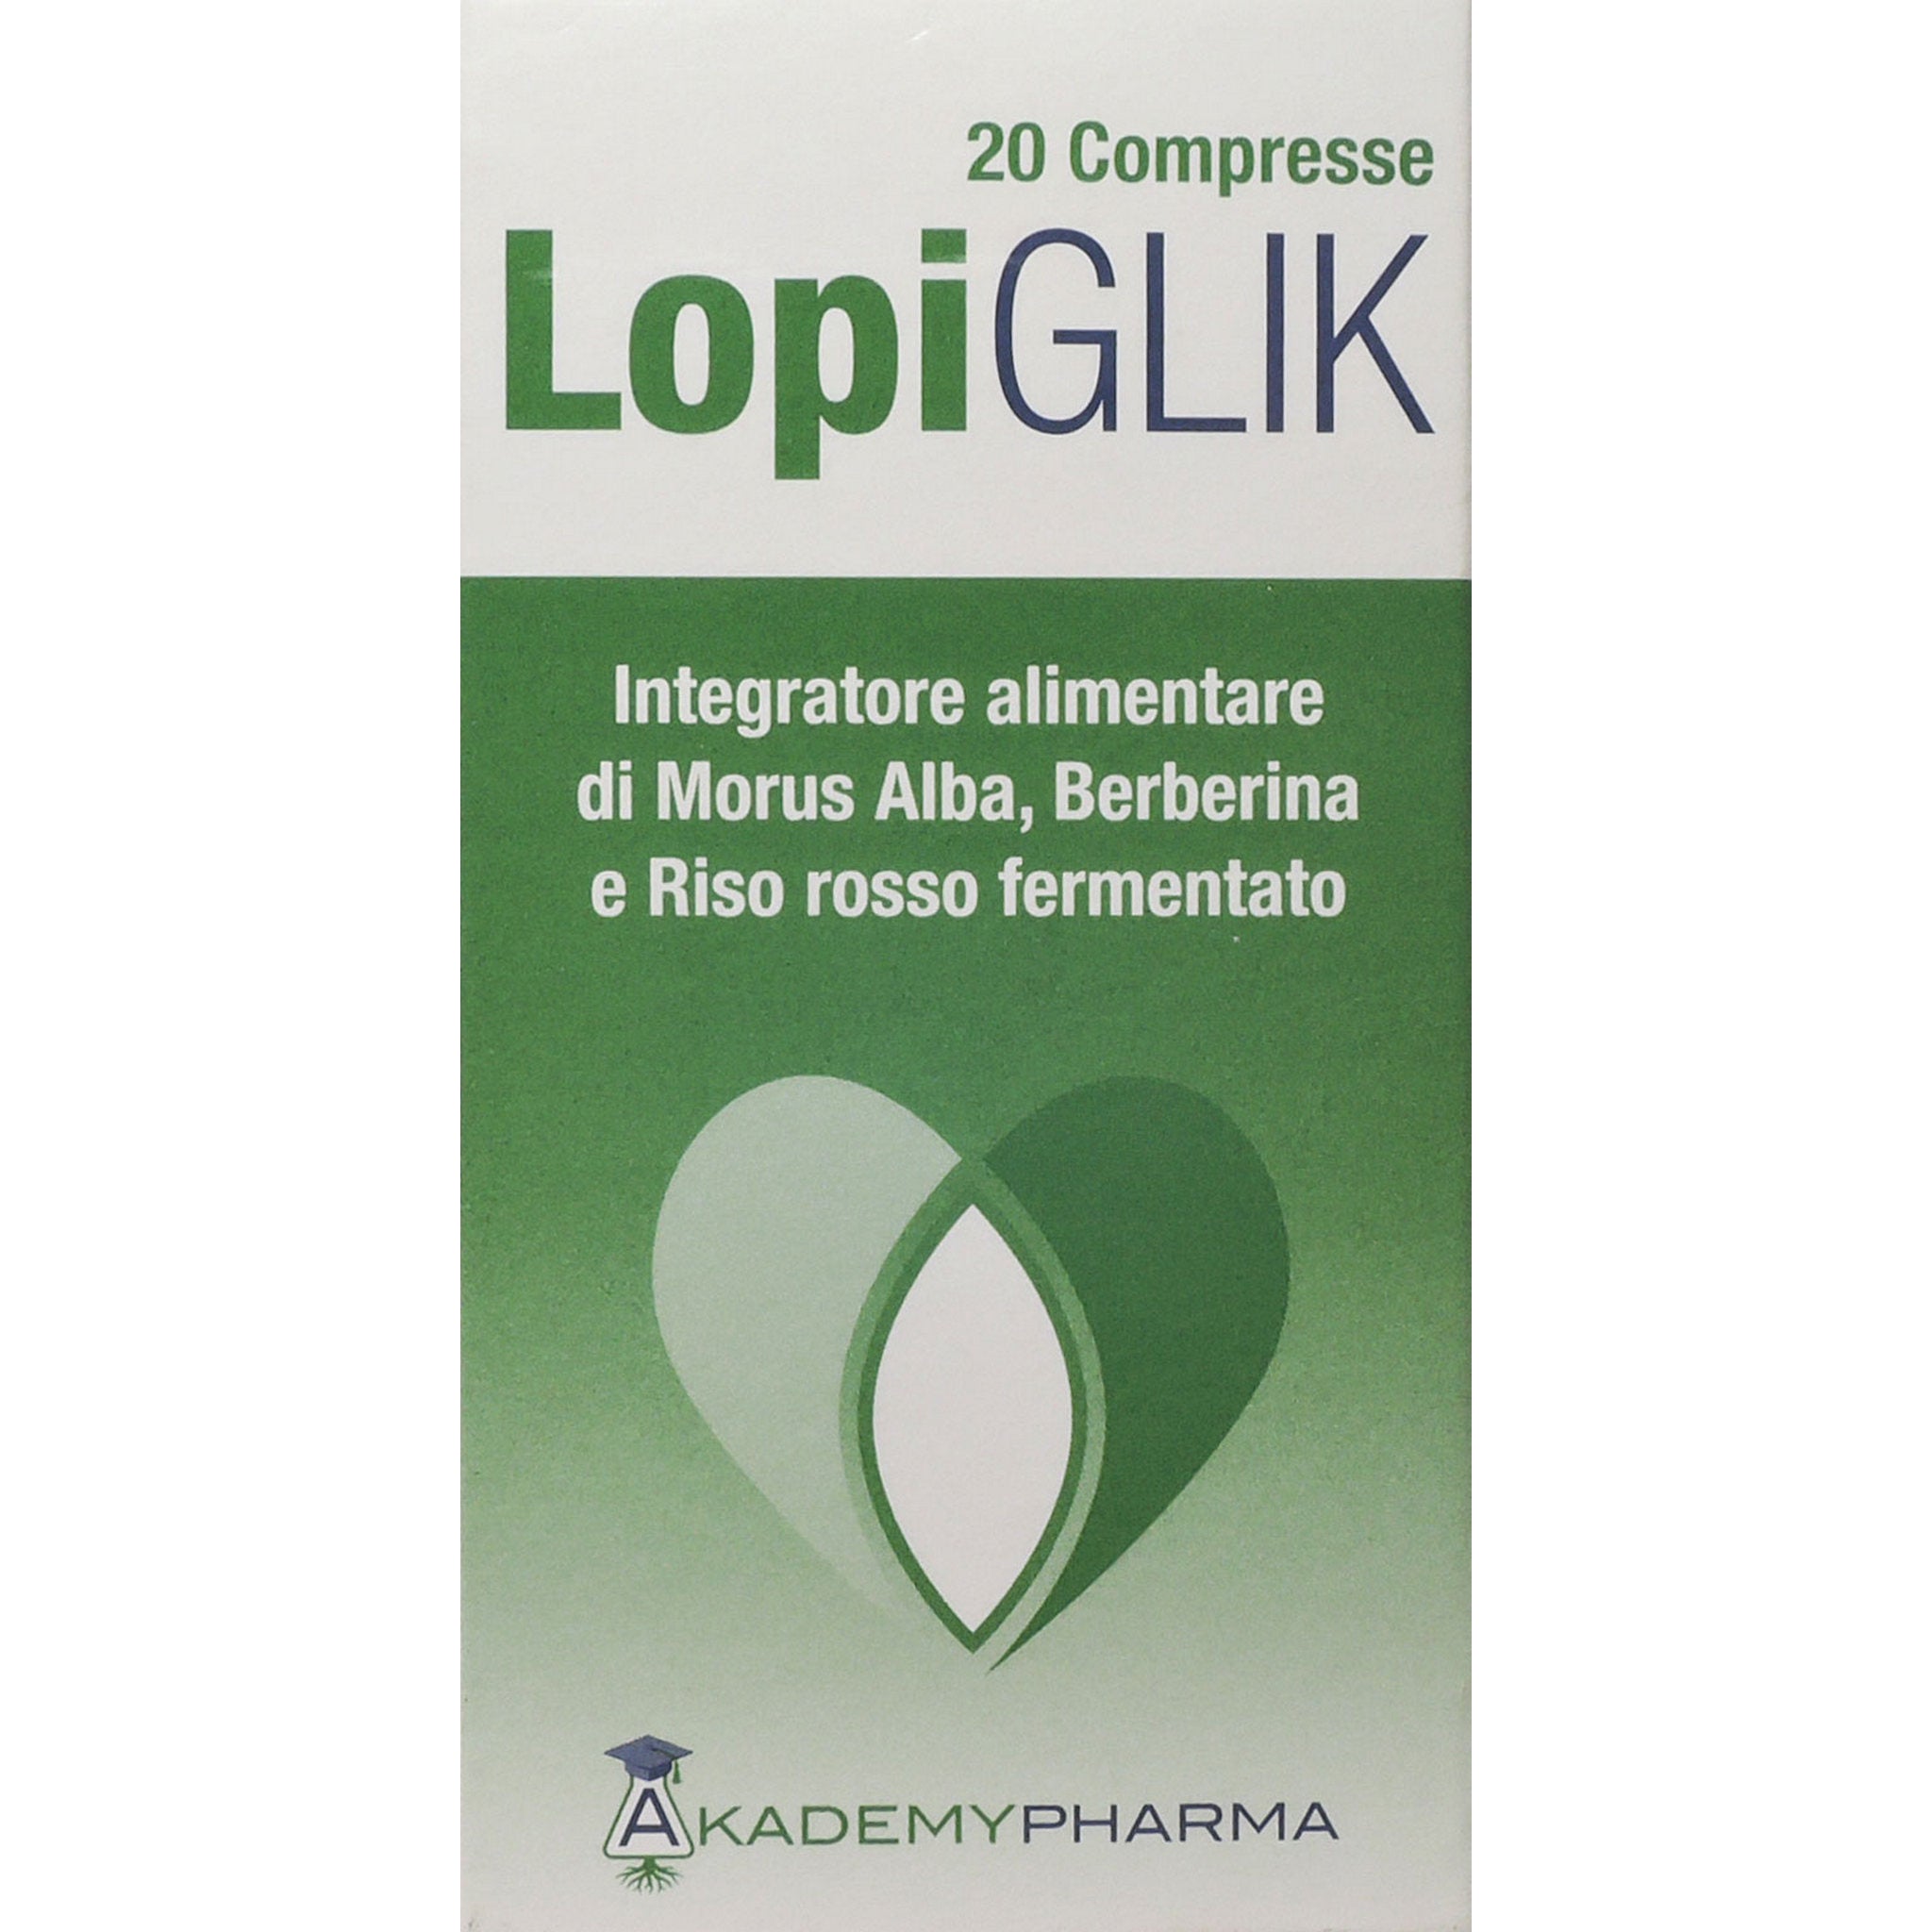 Lopiglik 20 Compresse